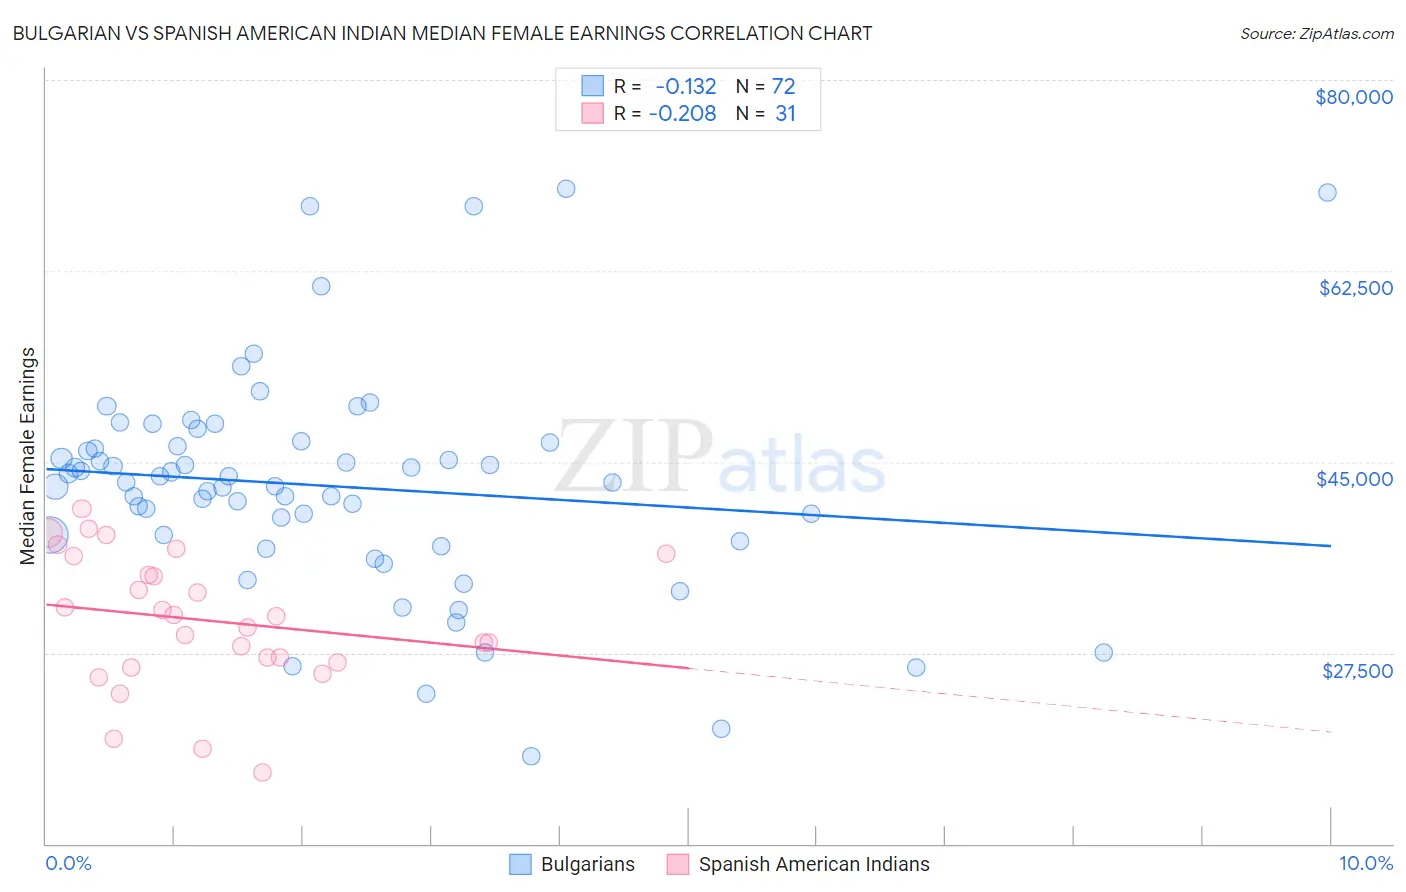 Bulgarian vs Spanish American Indian Median Female Earnings